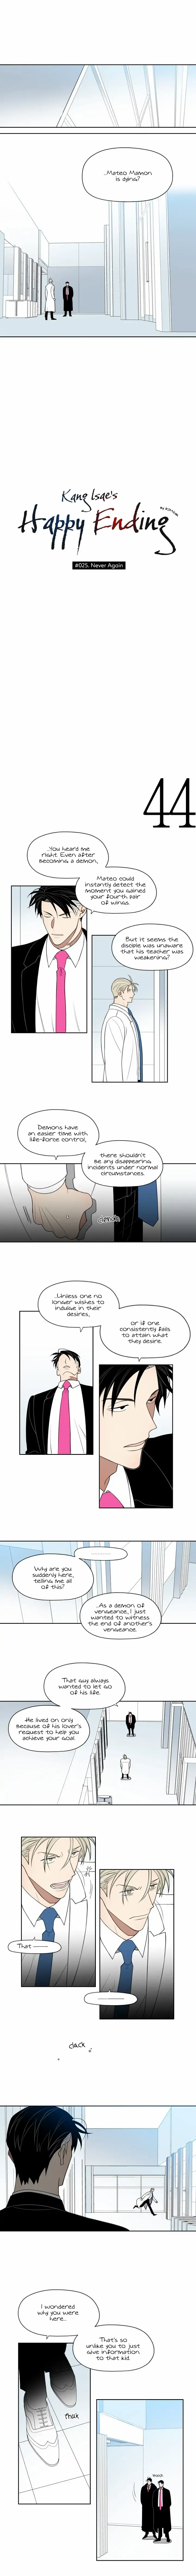 Kang Isae's Happy Ending - Page 1